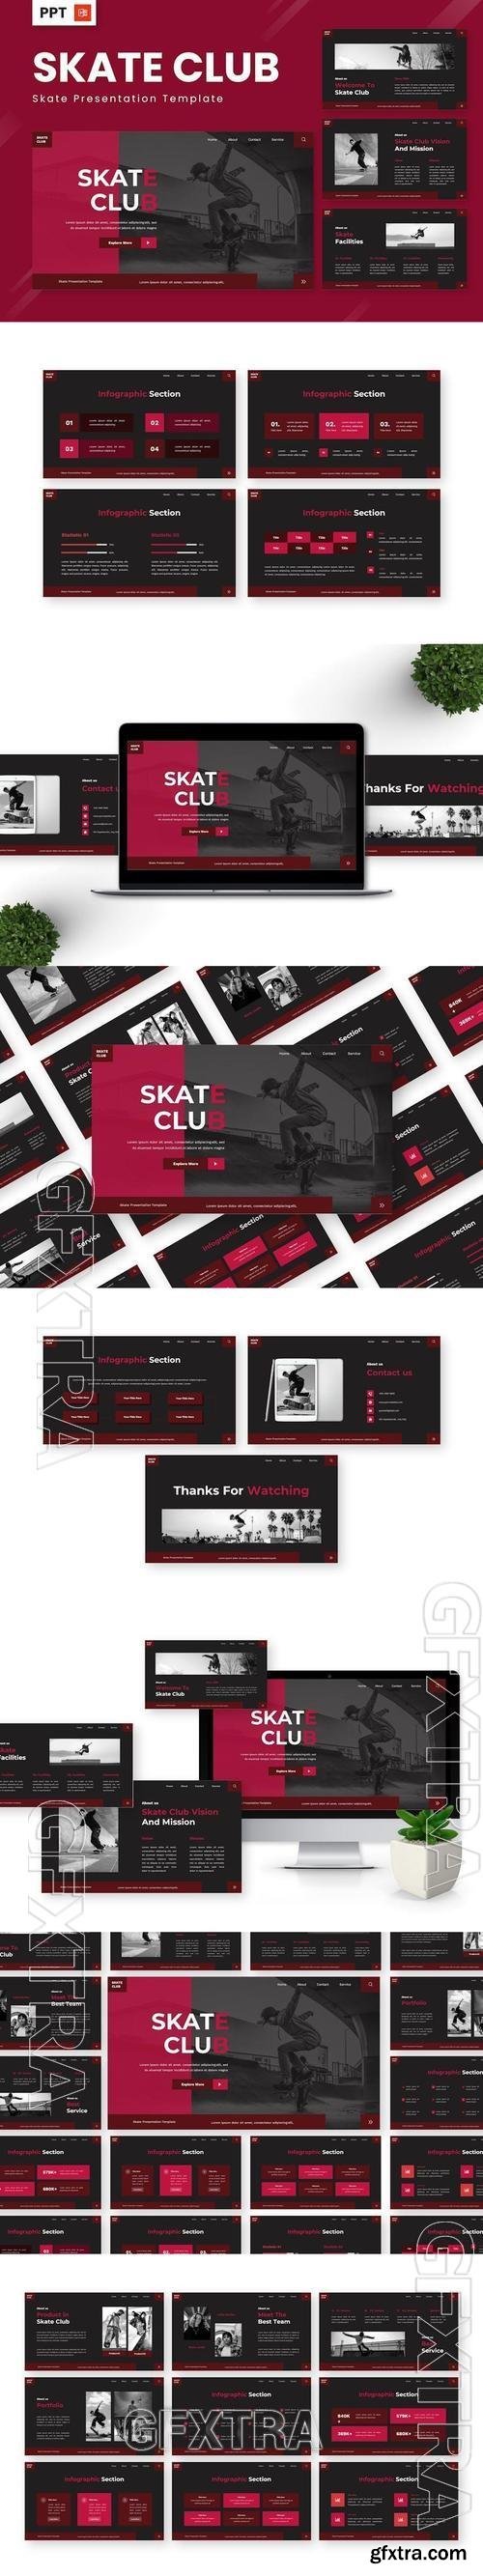 Skate Club - Skate Powerpoint Templates WHL6QV3